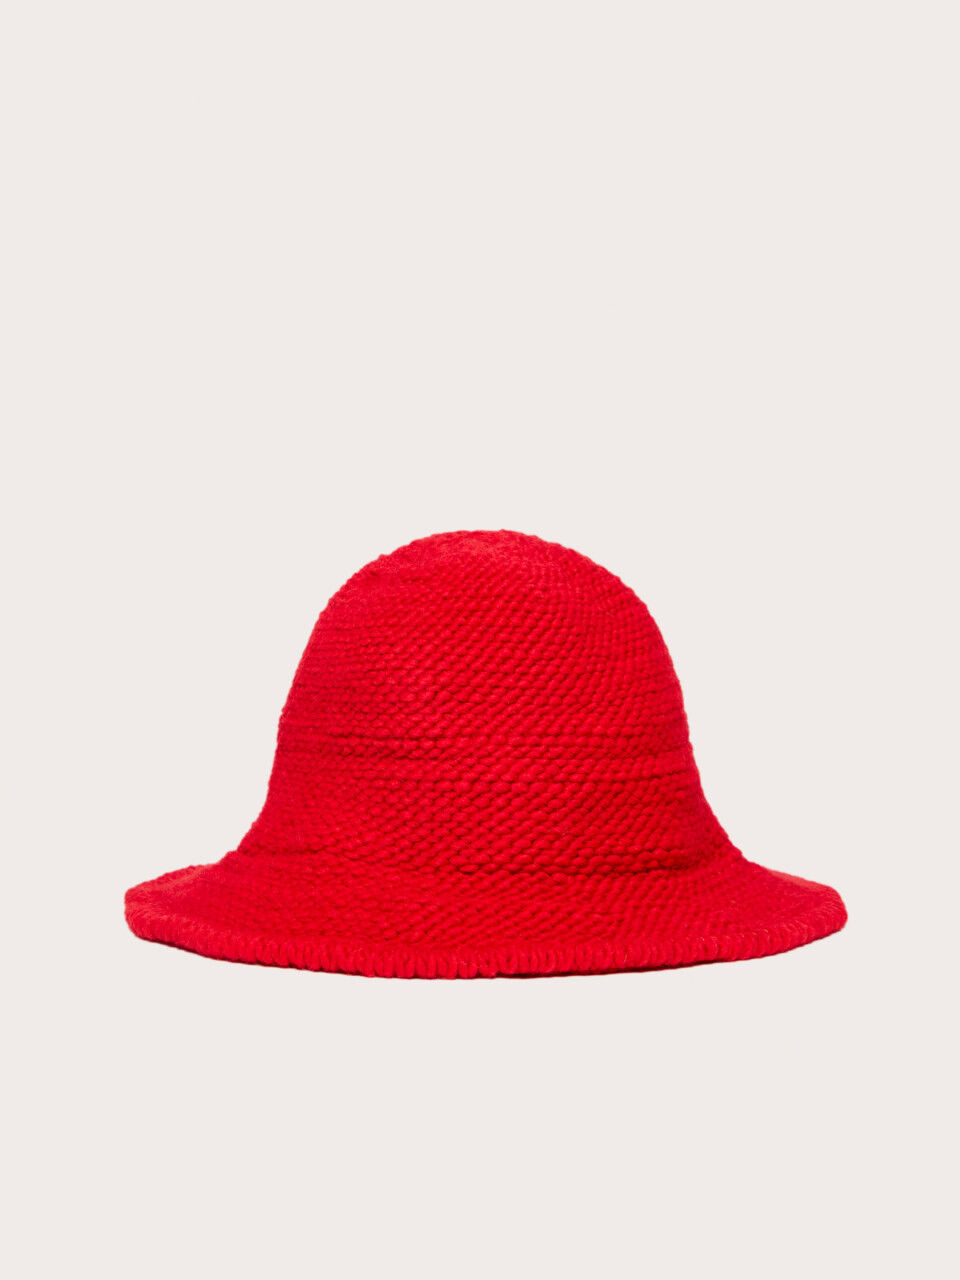 Knit fisherman's hat